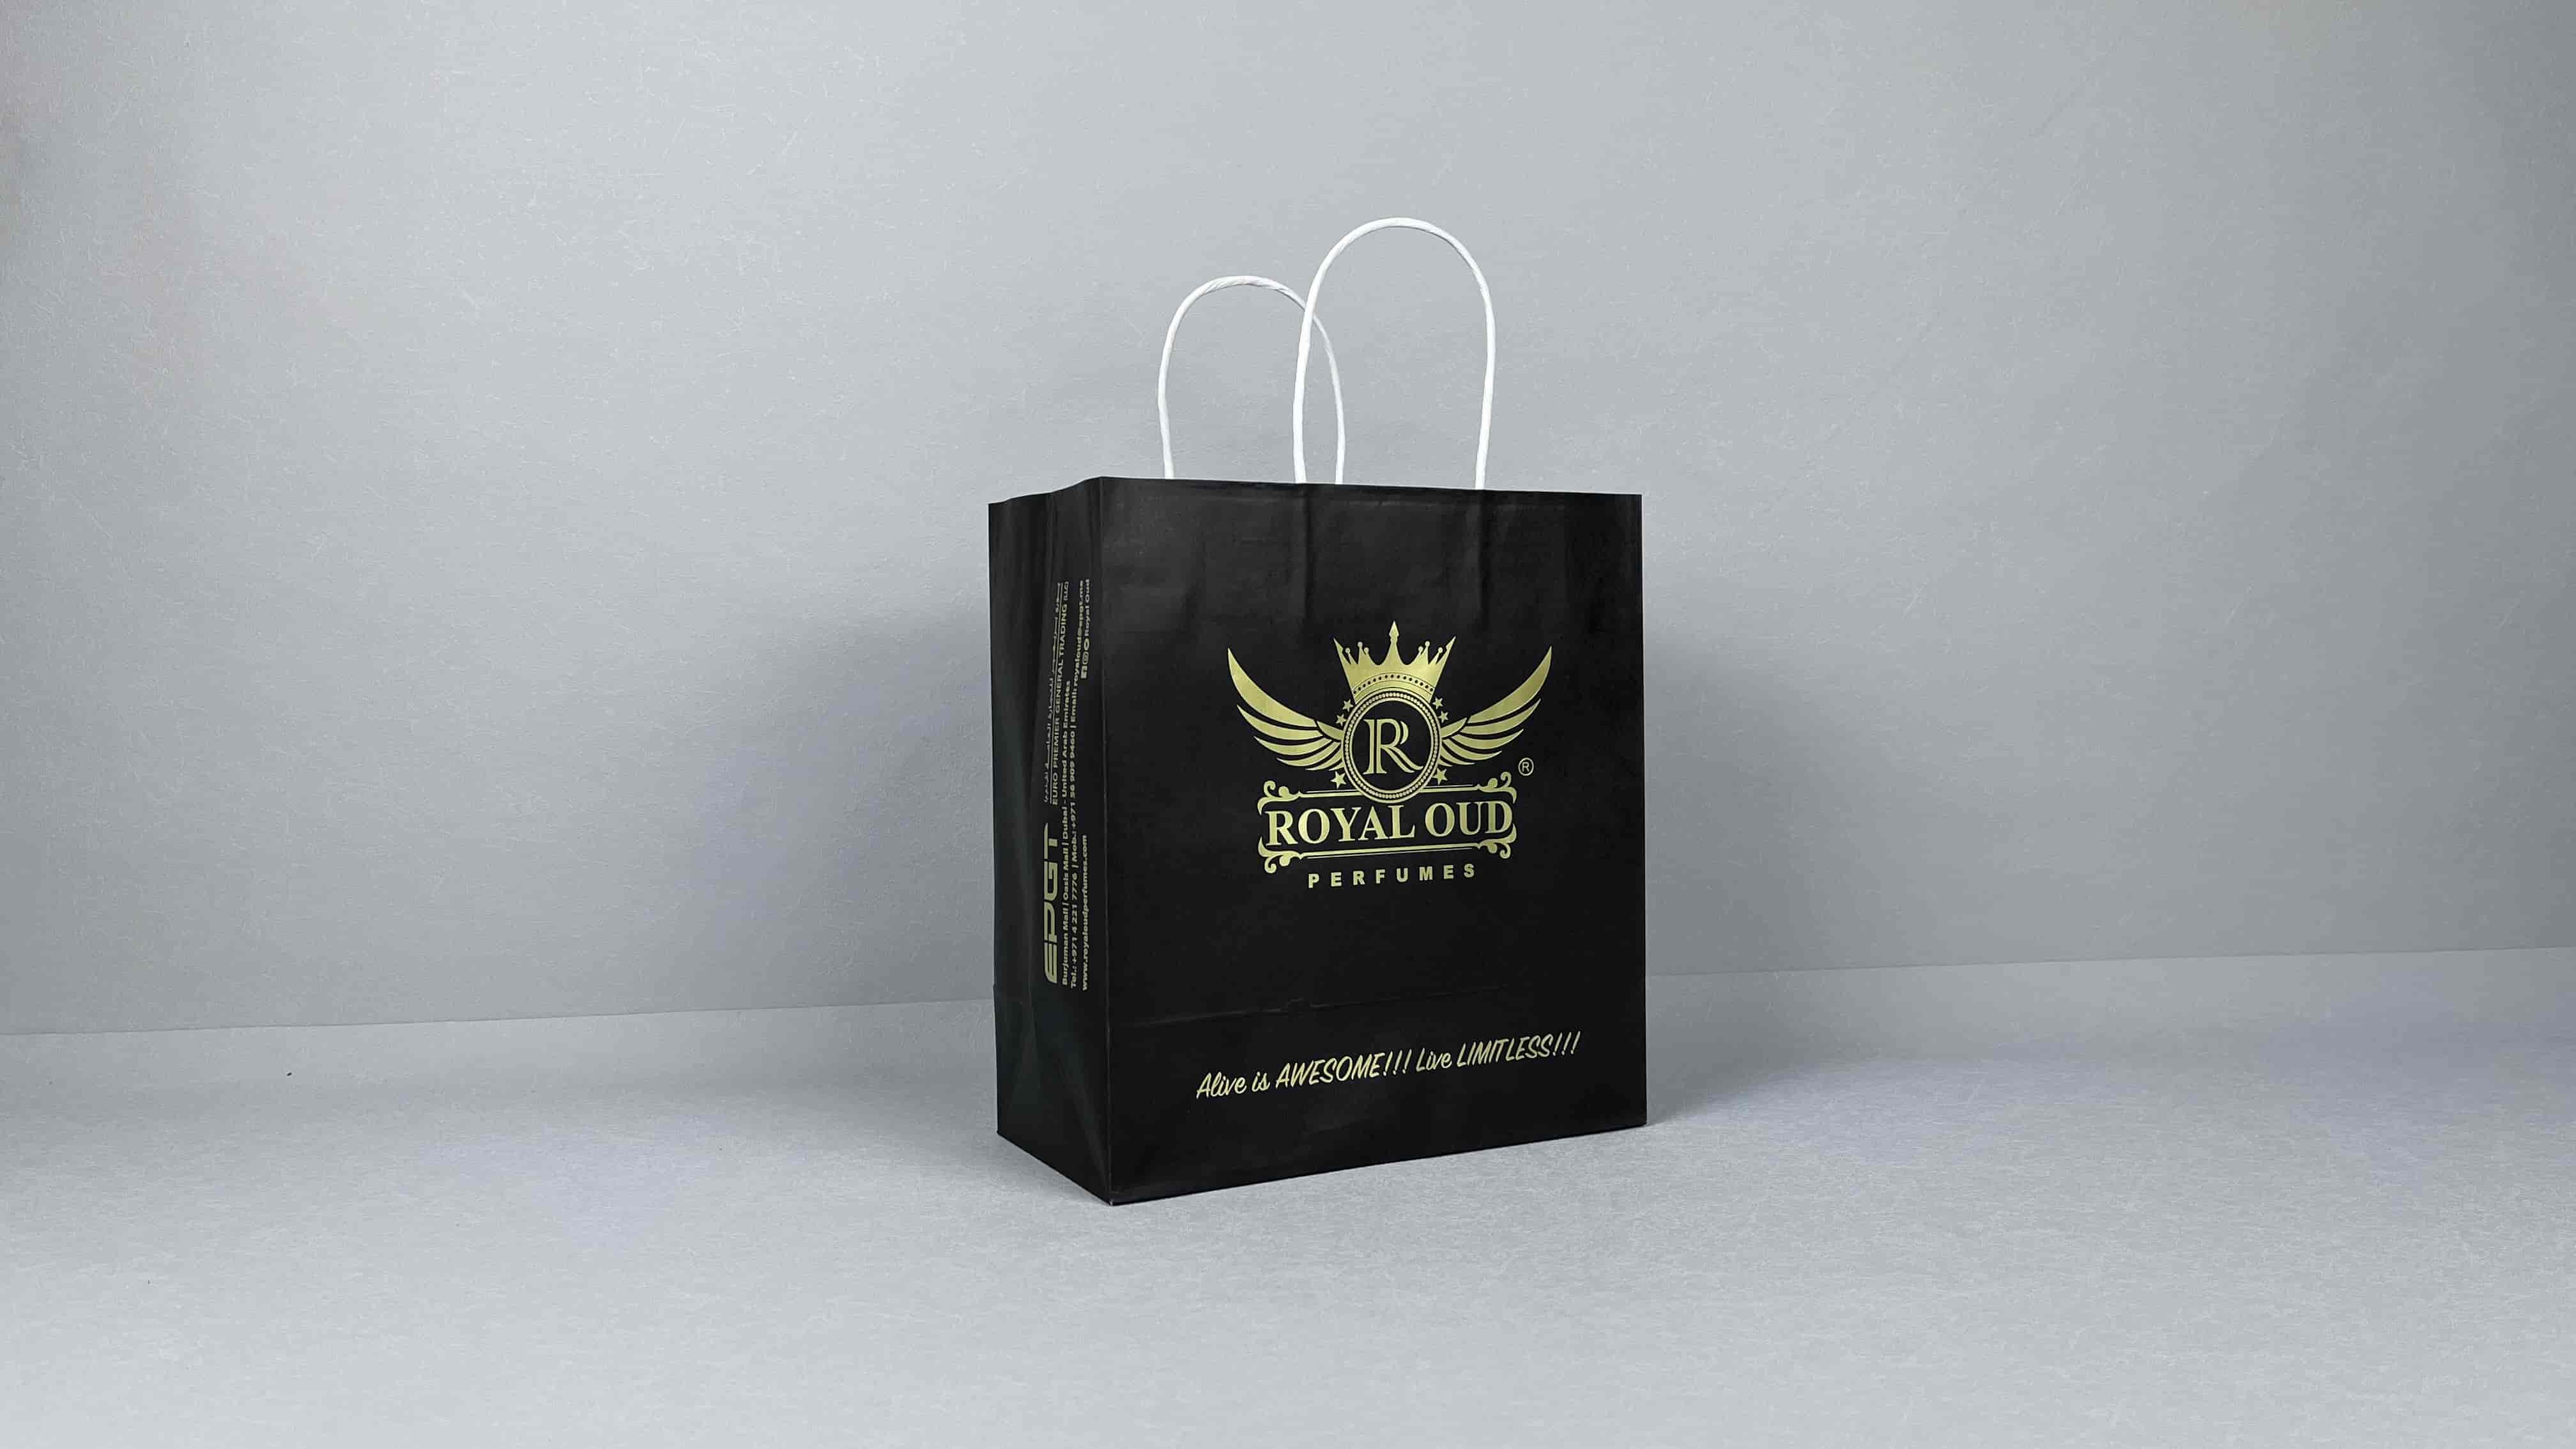 Bolsas de papel negras personalizadas para supermercados en pedidos a granel